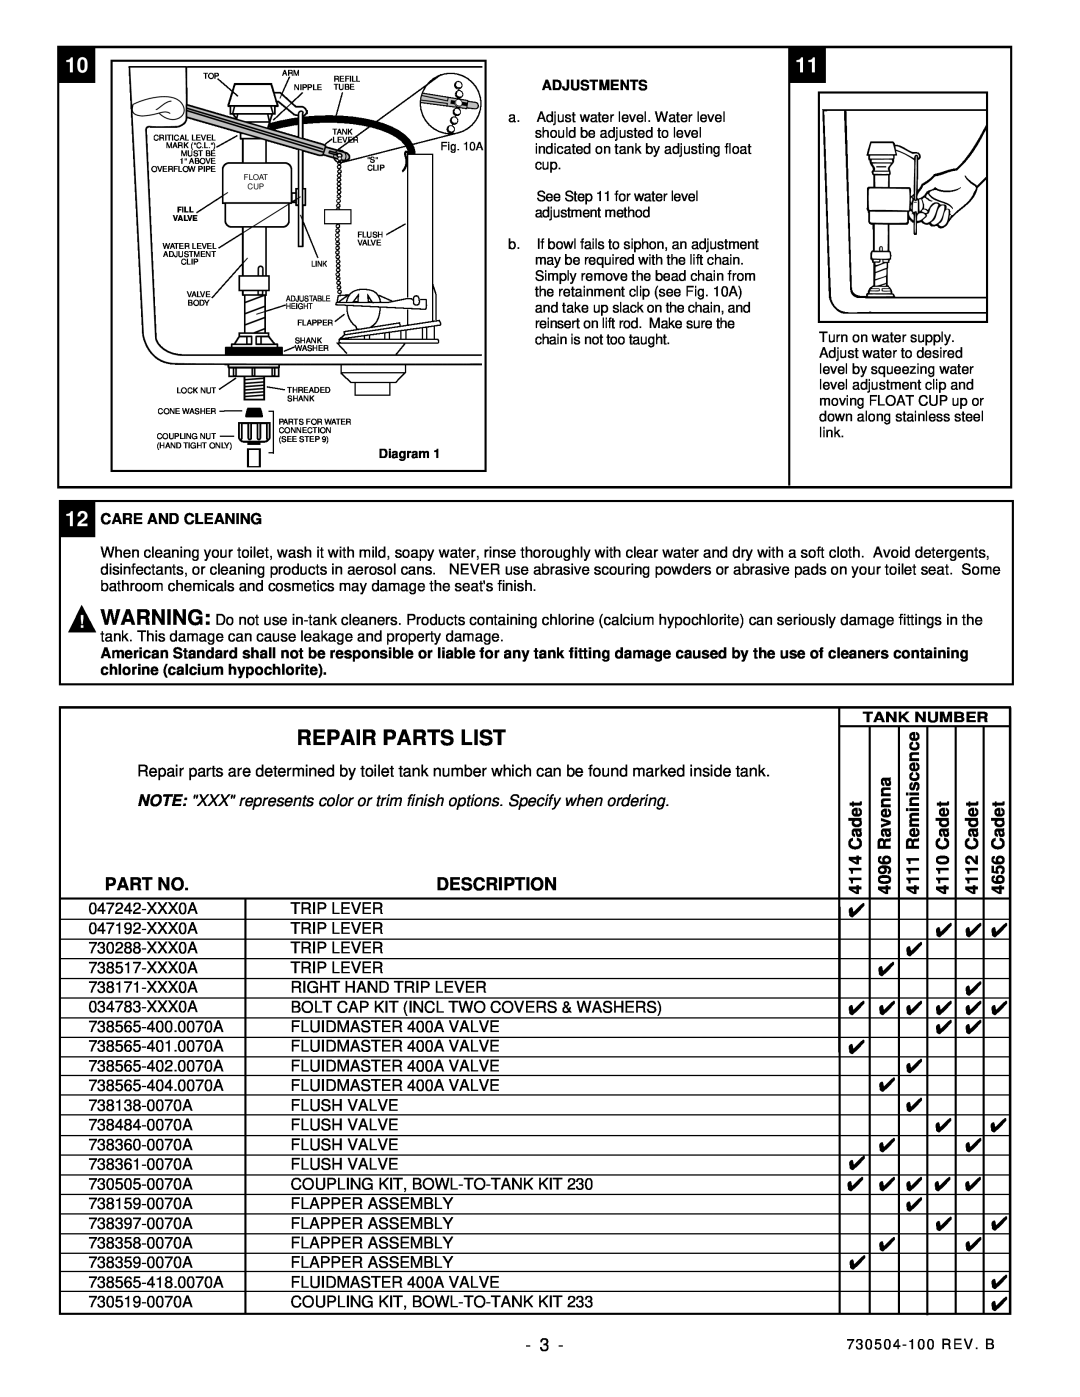 American Standard 2646, 3600, 656 installation instructions Repair Parts List, Description, Cadet, Ravenna, Reminiscence 